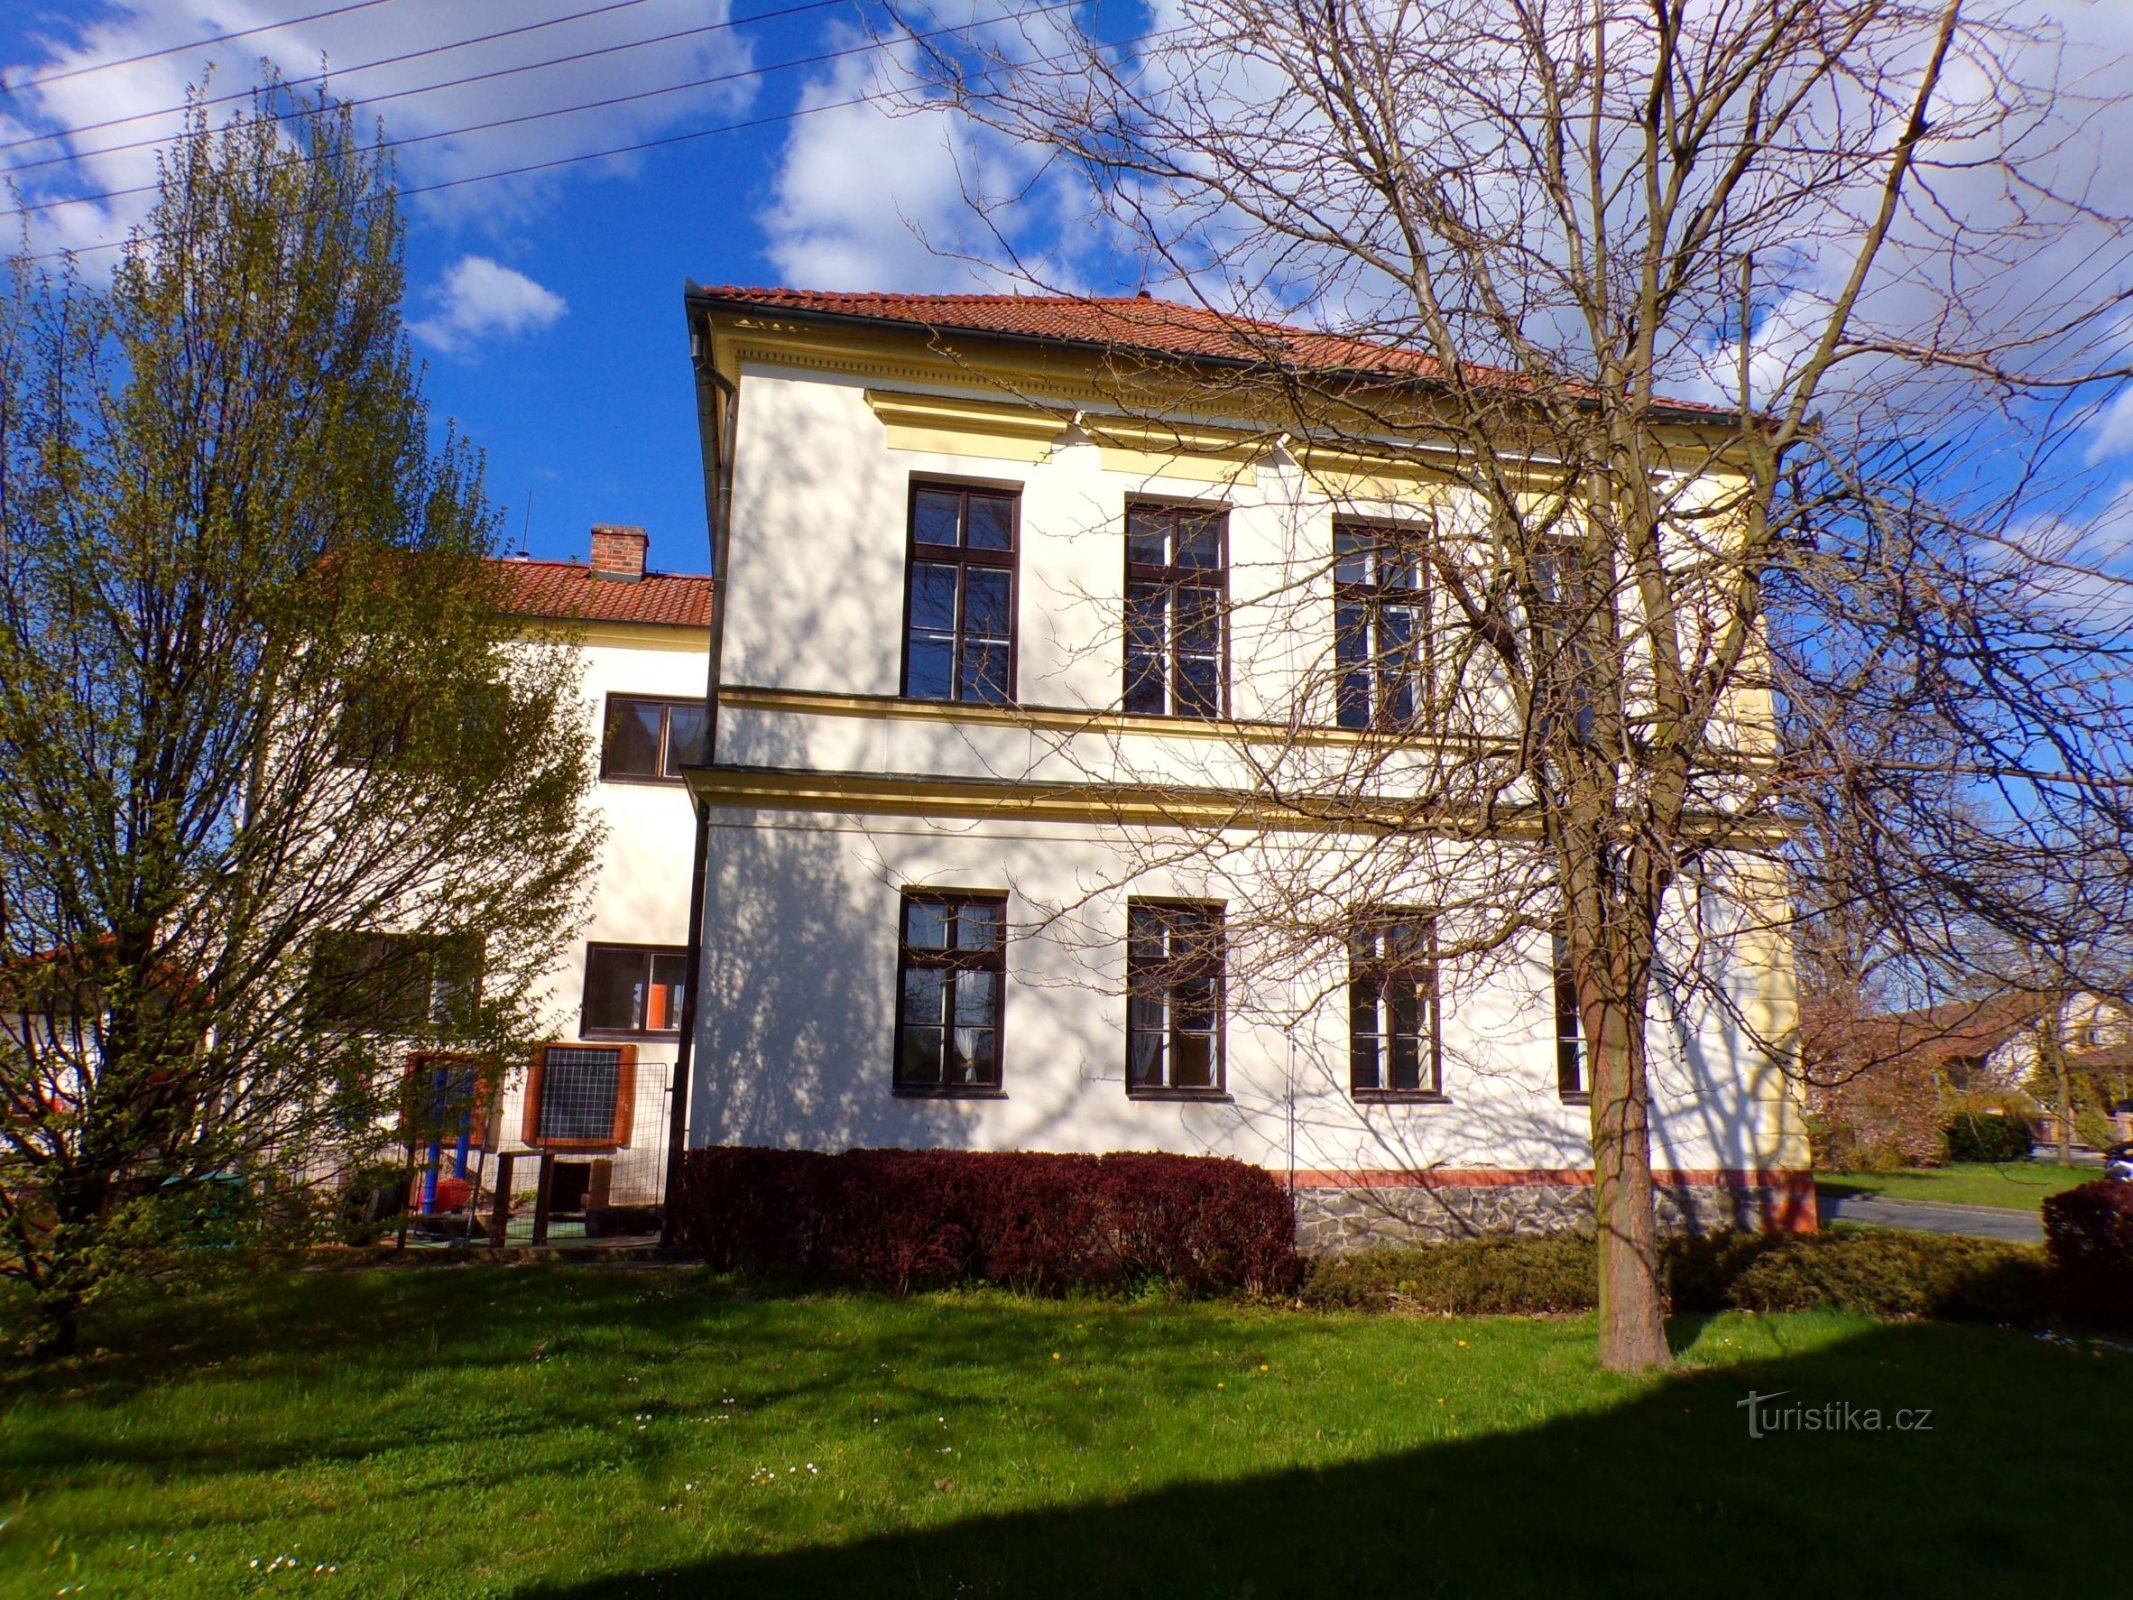 School in Rosice nad Labem (Pardubice, 23.4.2022/XNUMX/XNUMX)